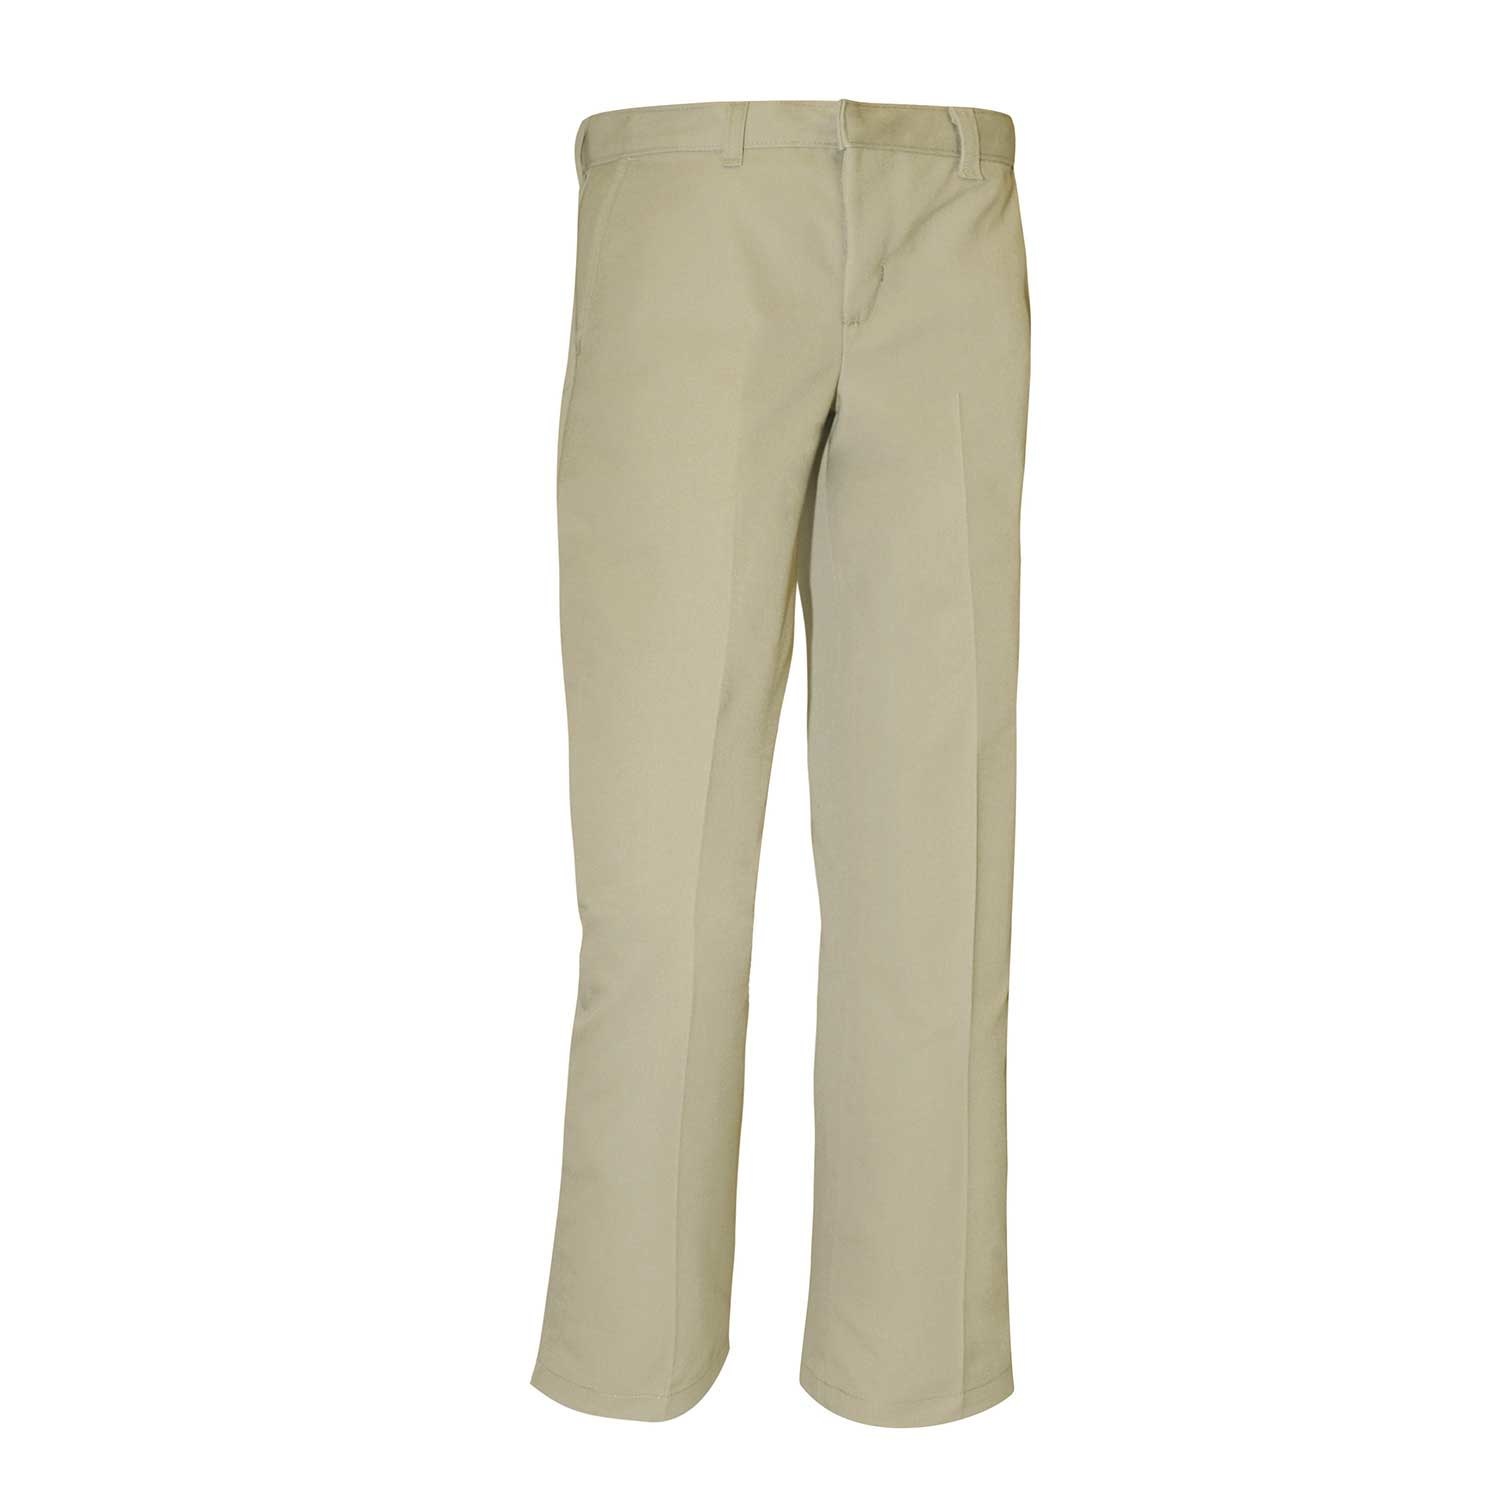 GAP Kids Boys Casual School Uniform Navy Blue Chino Pants Size 6 | eBay